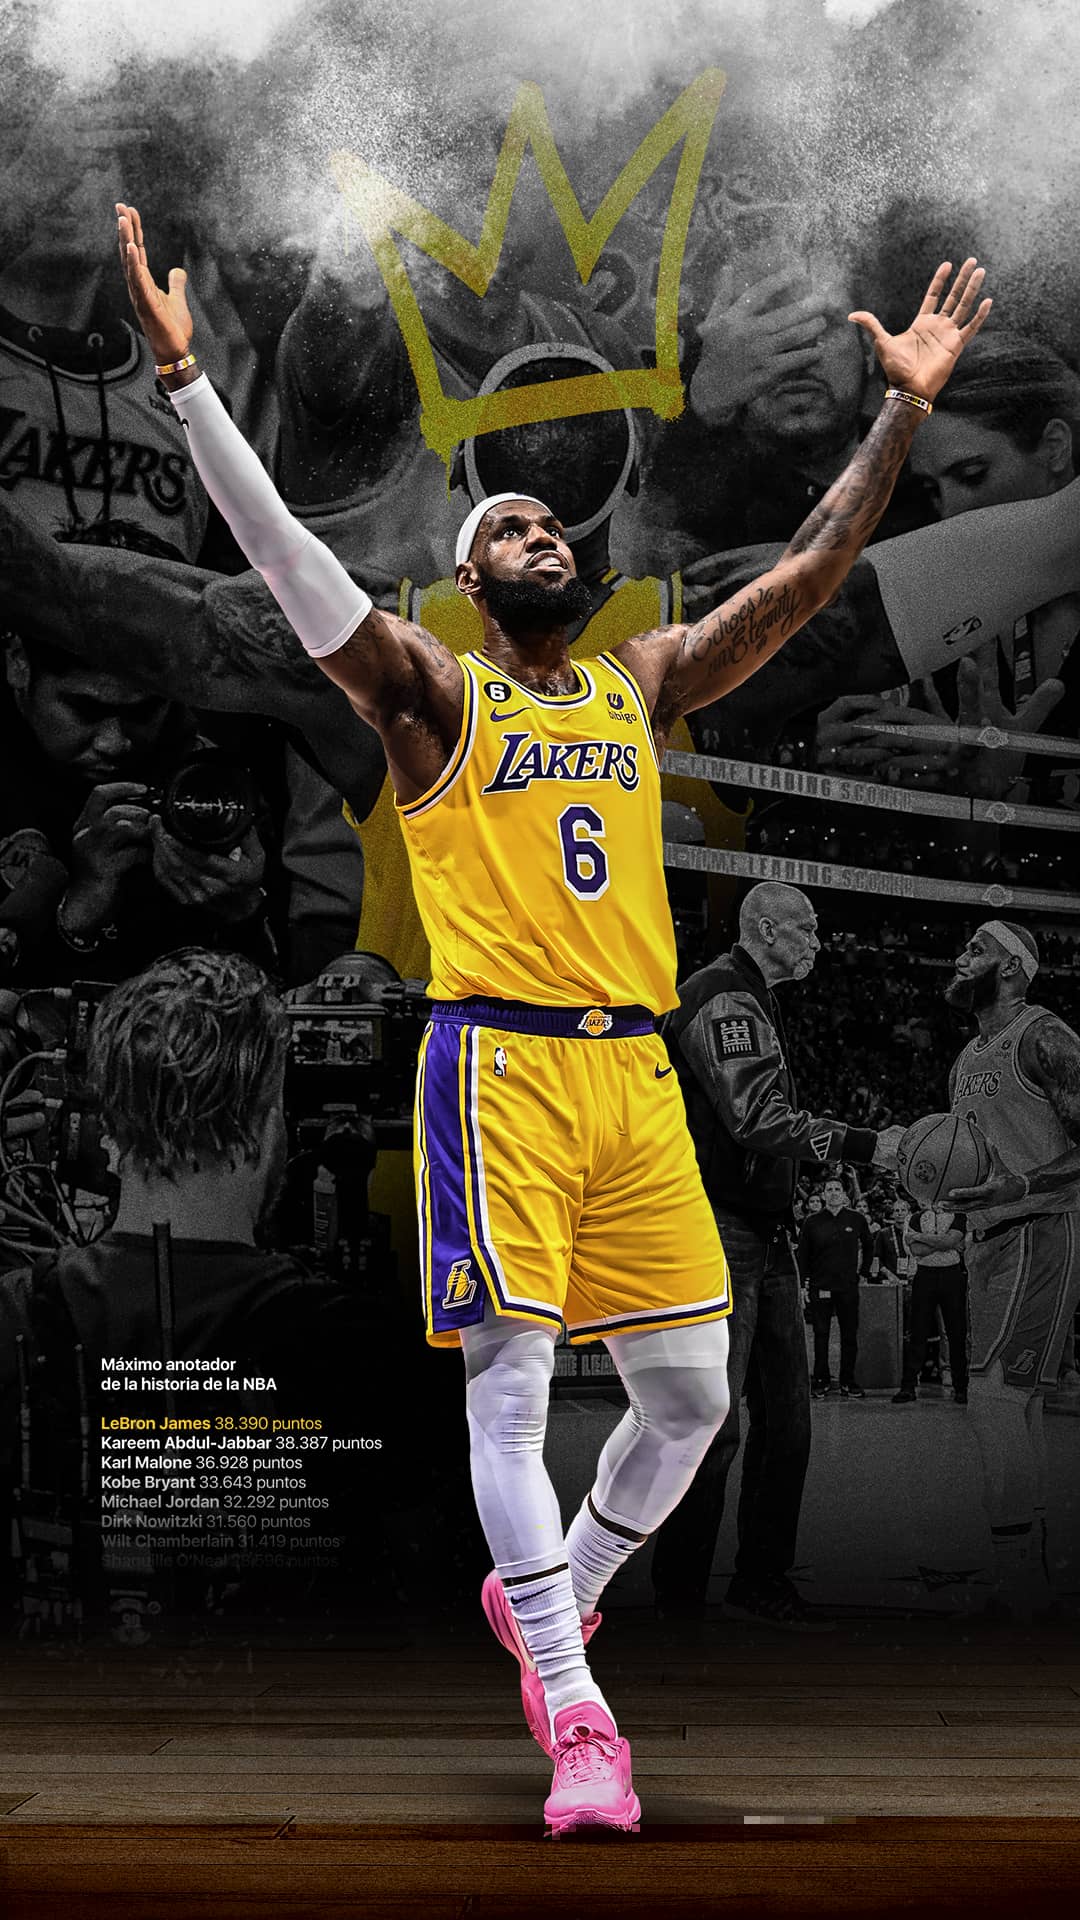 Hecho para recordar chasquido pico Wallpapers Los Angeles Lakers | NBA ID